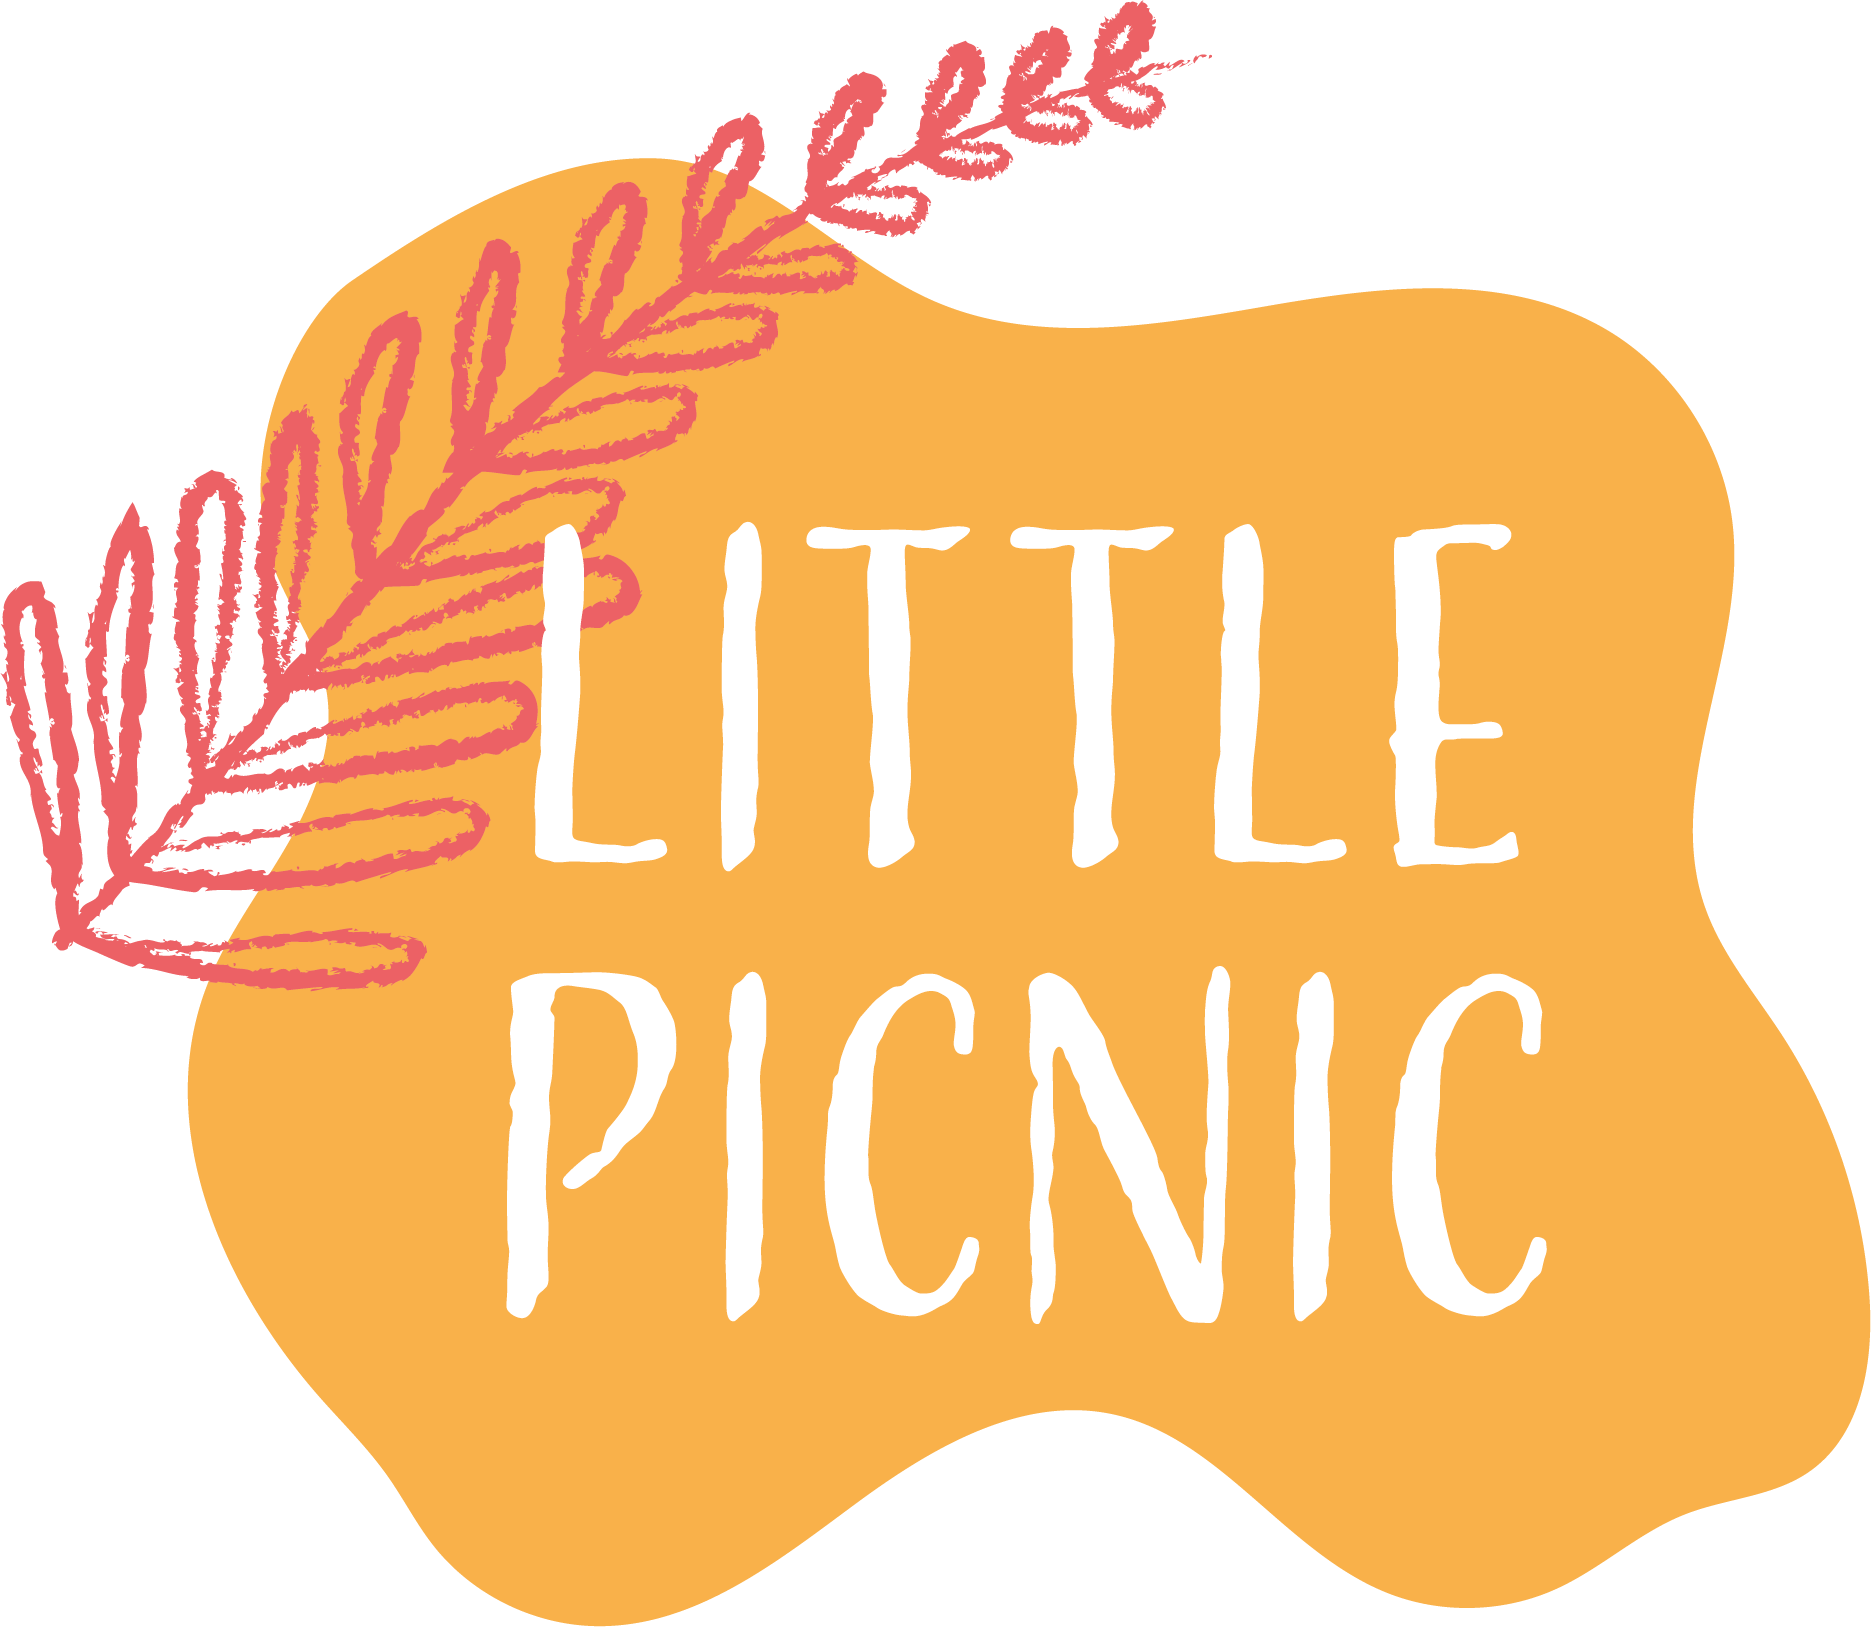 Picnic Logo - Little Picnic | Electric Picnic